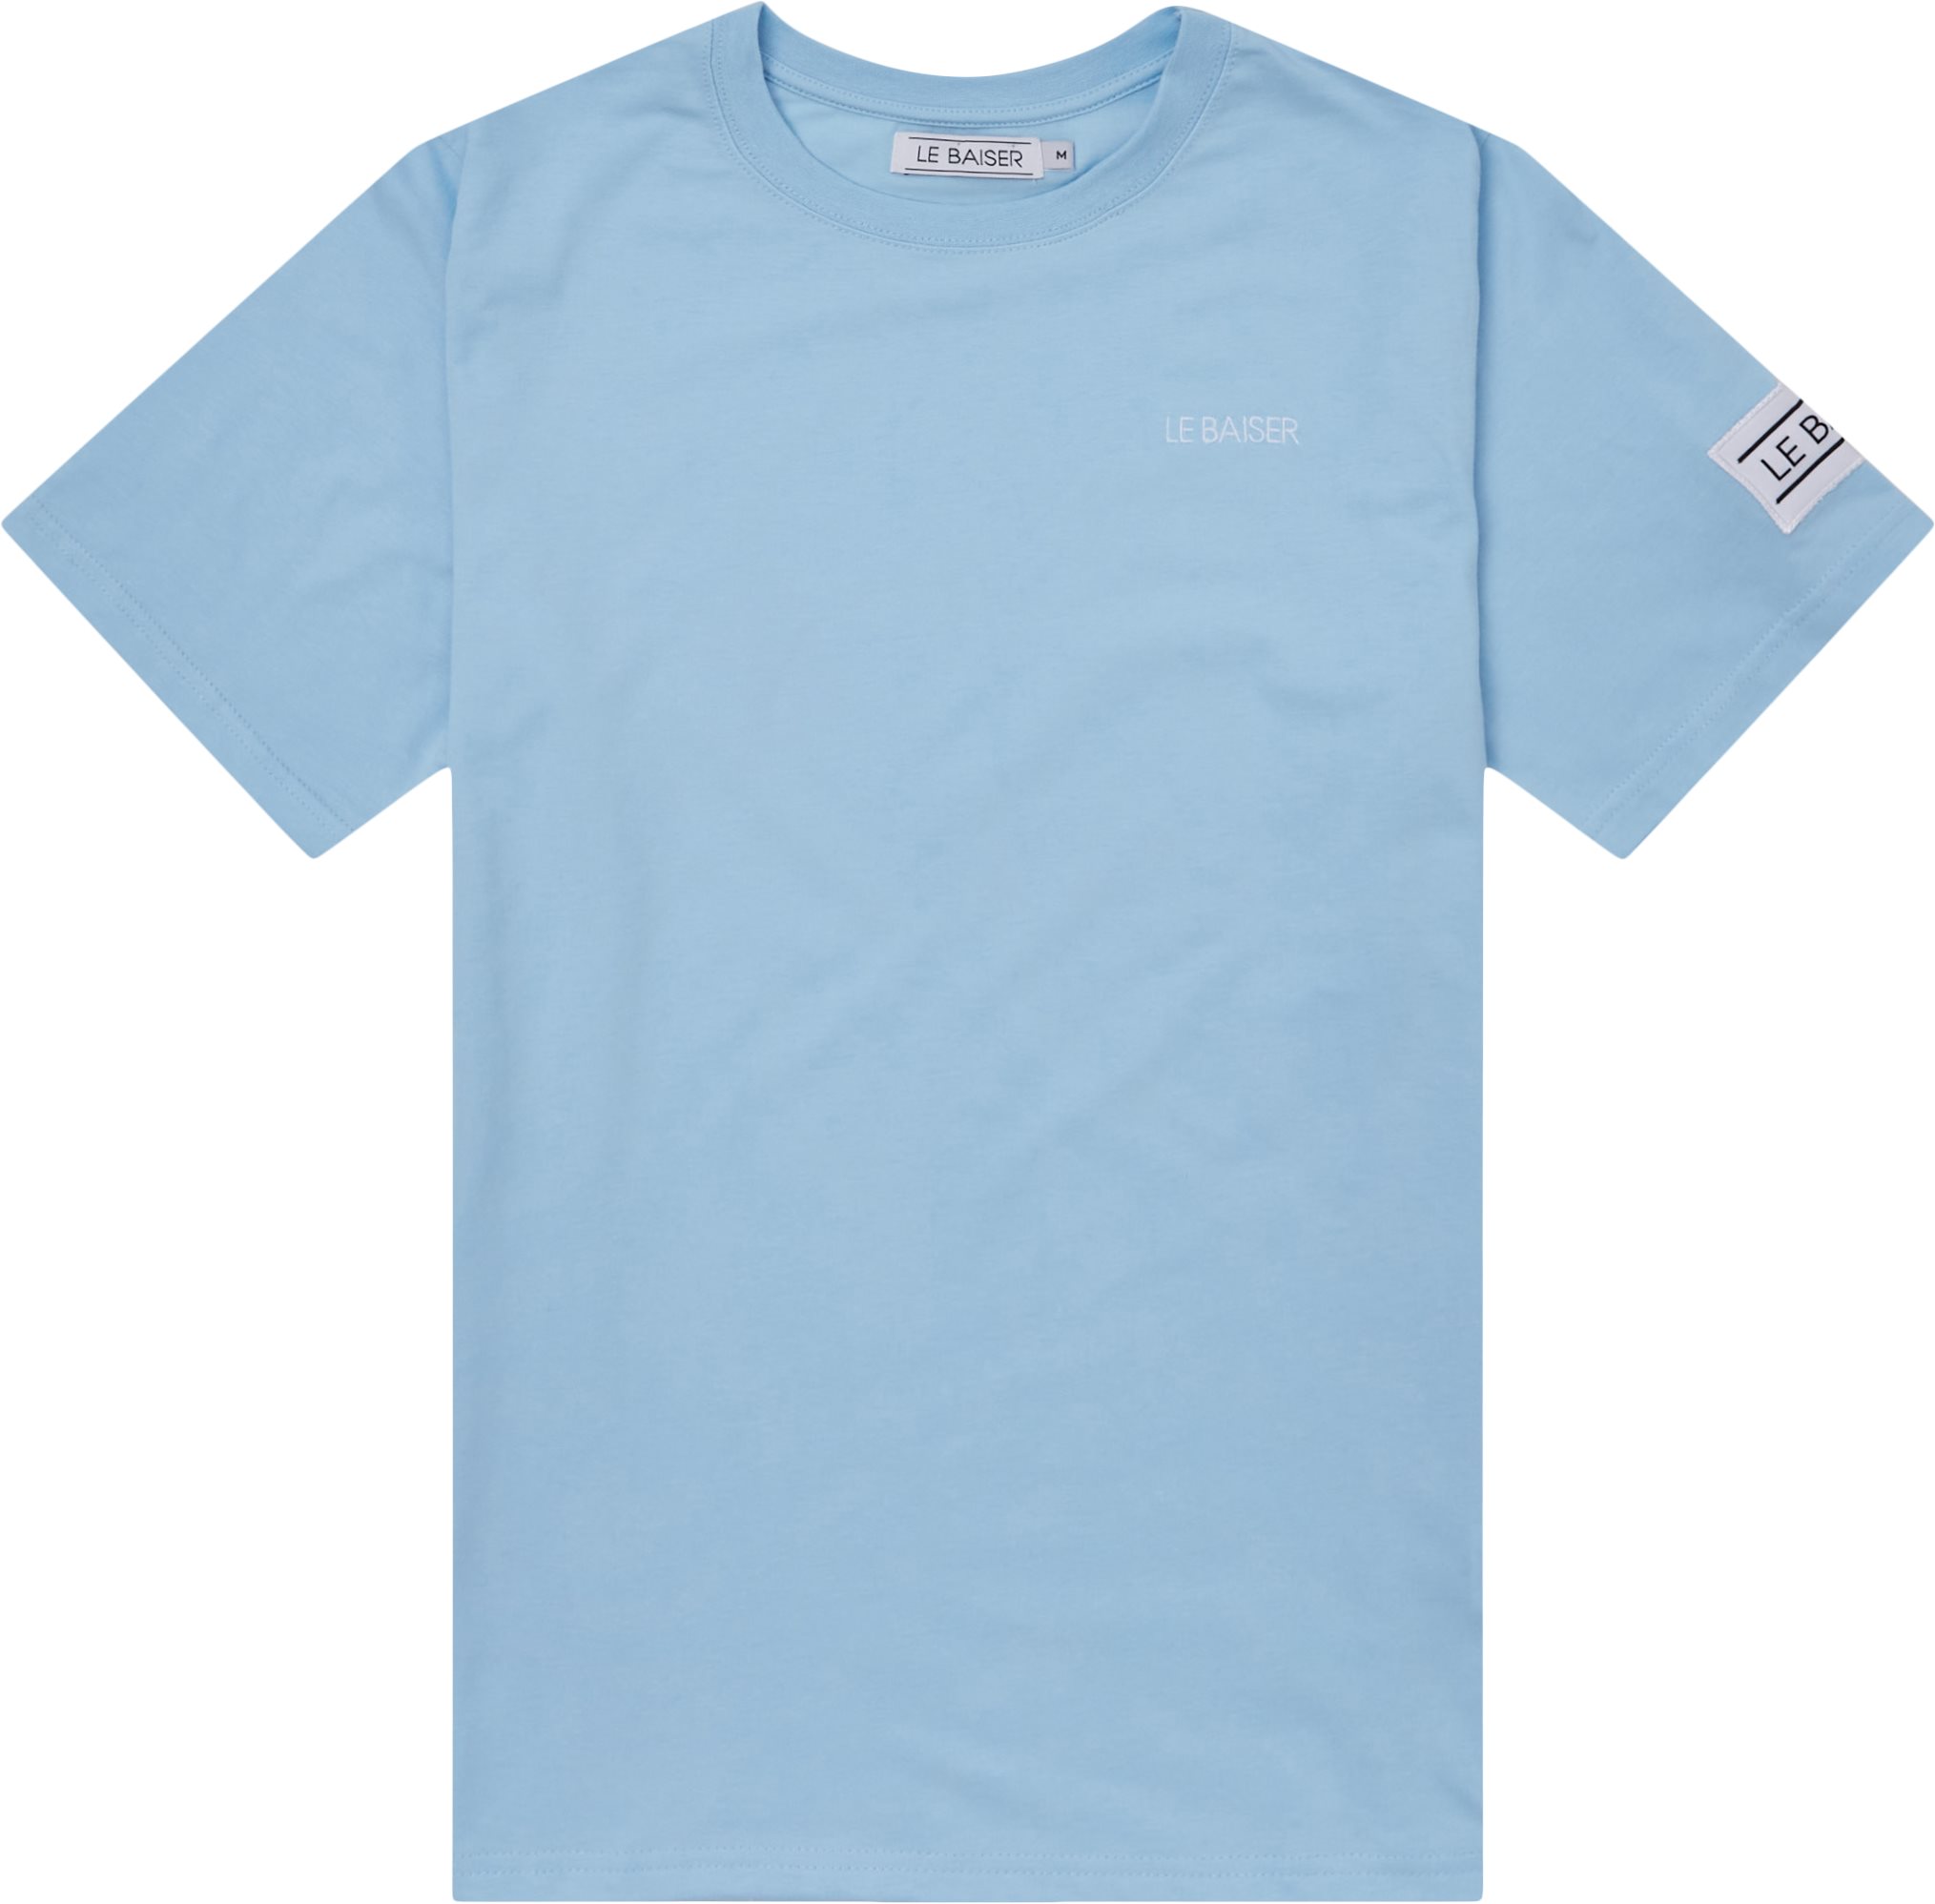 Bourg Tee - T-shirts - Regular fit - Blue